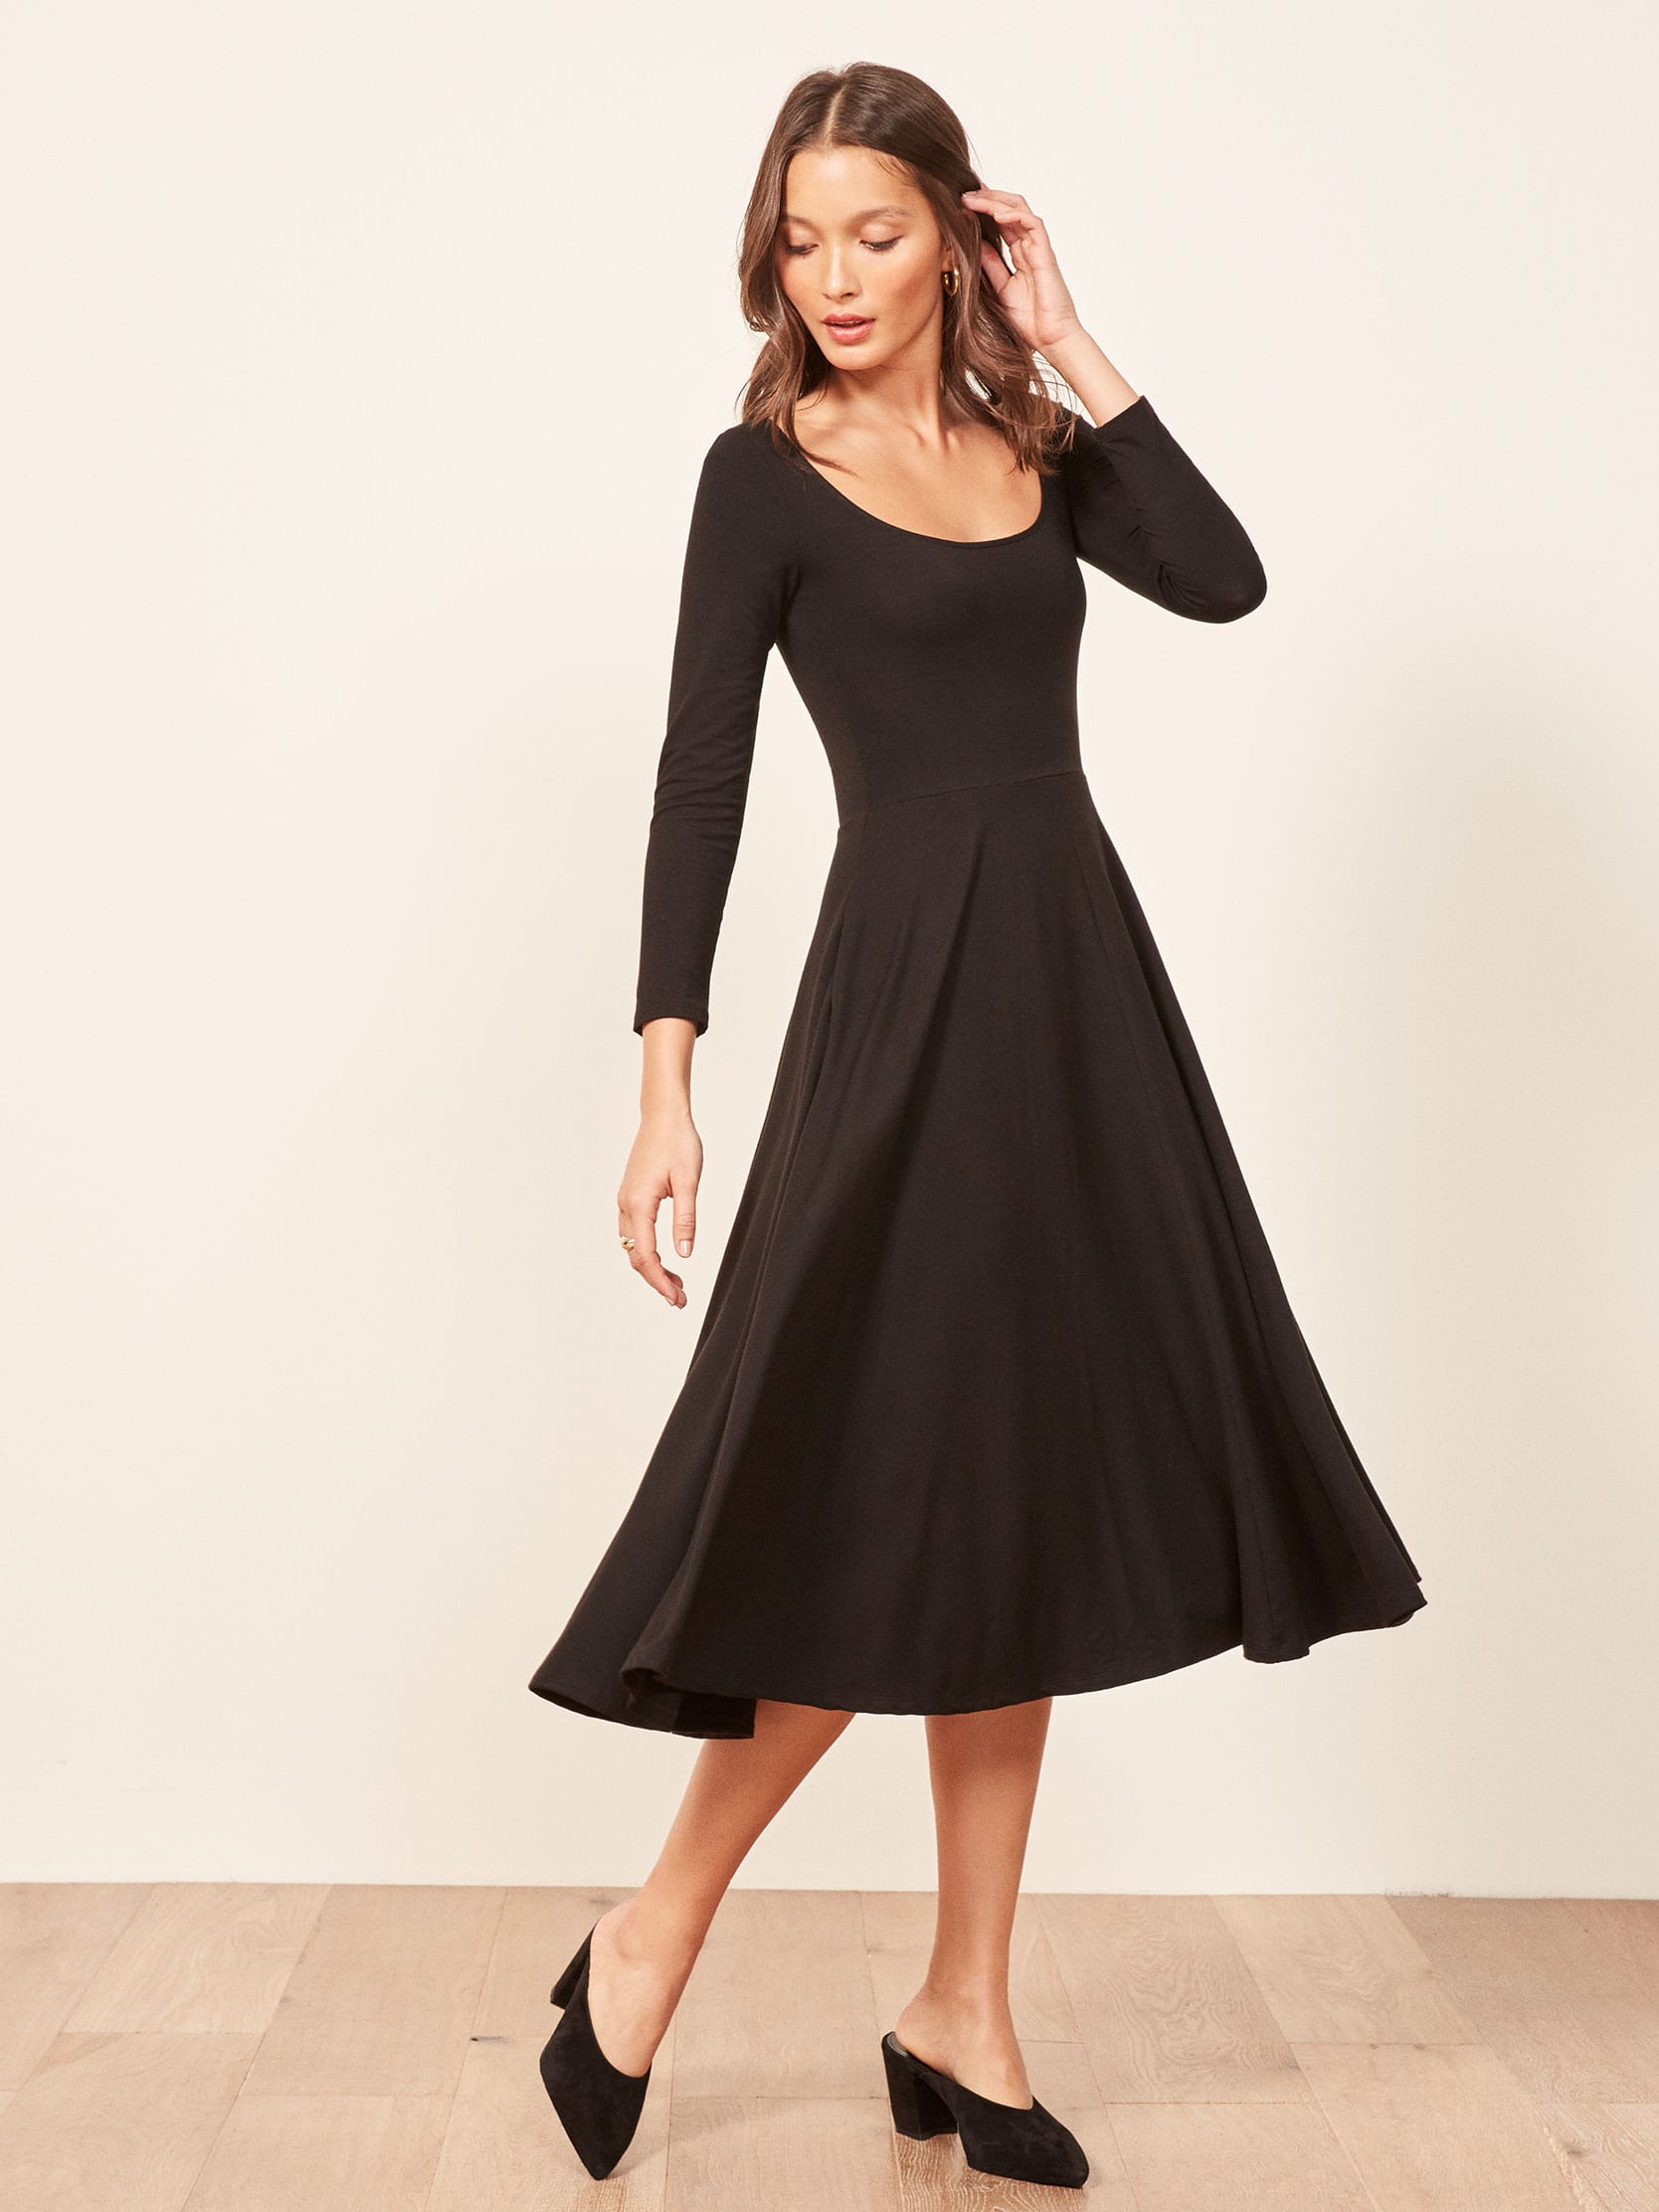 midi length black dress with sleeves